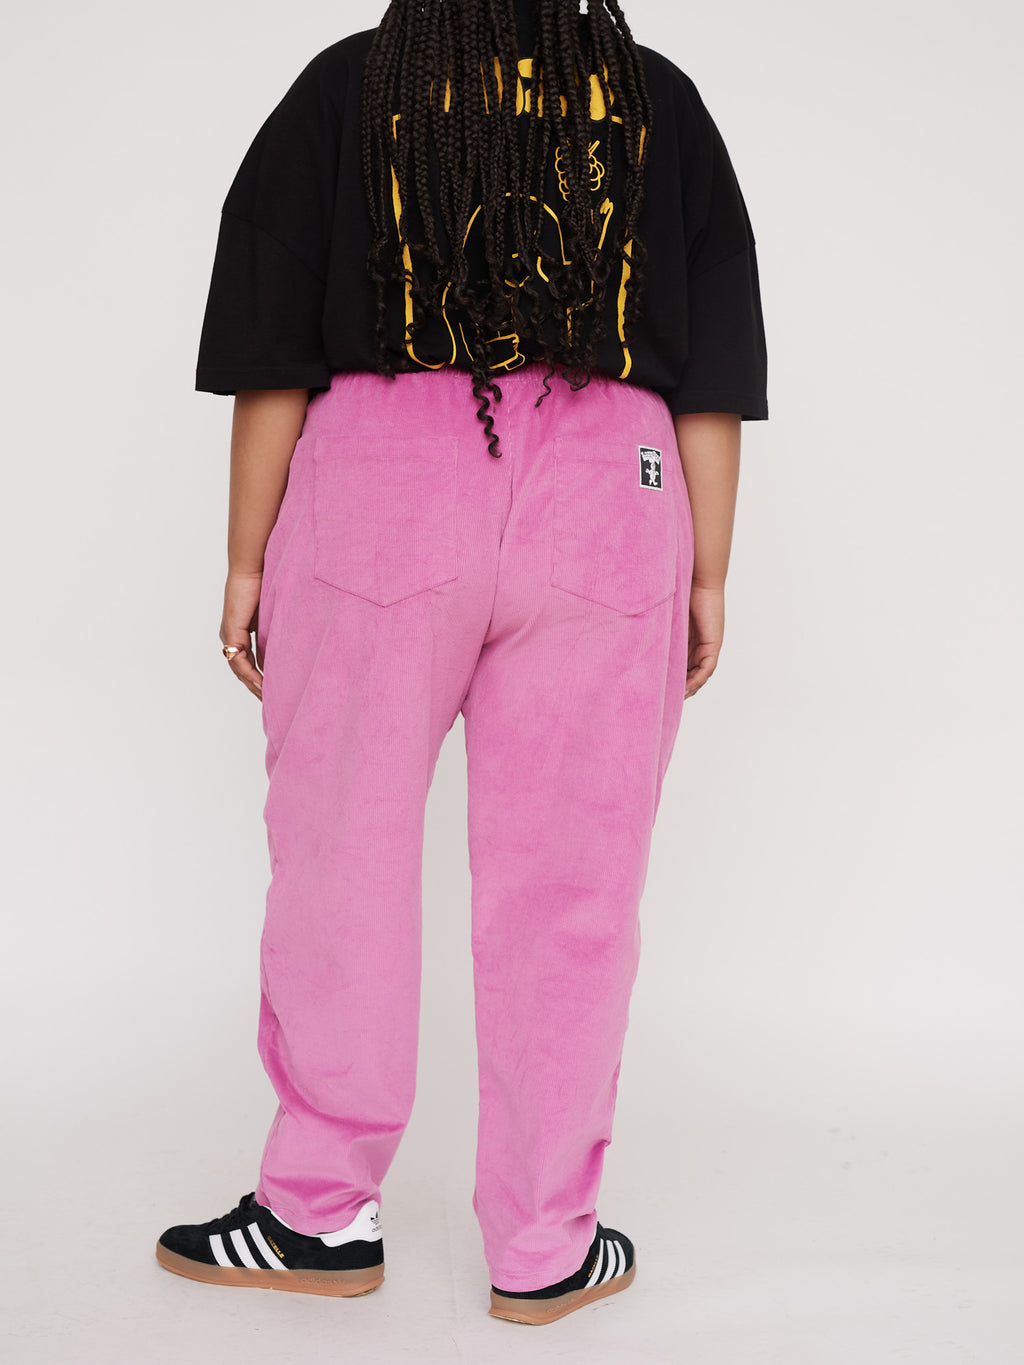 Pink Custard Cord Pants